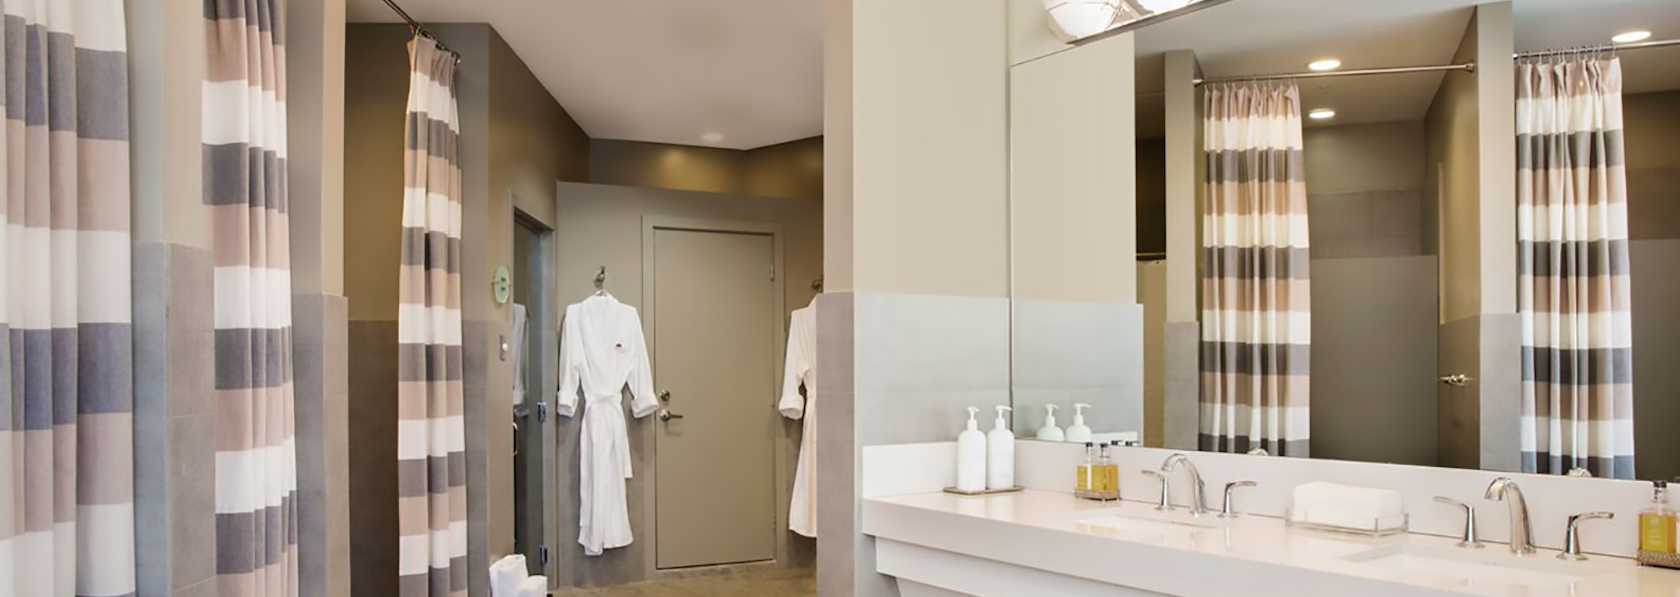 Aquanox Spa bathroom with robe hanging on door